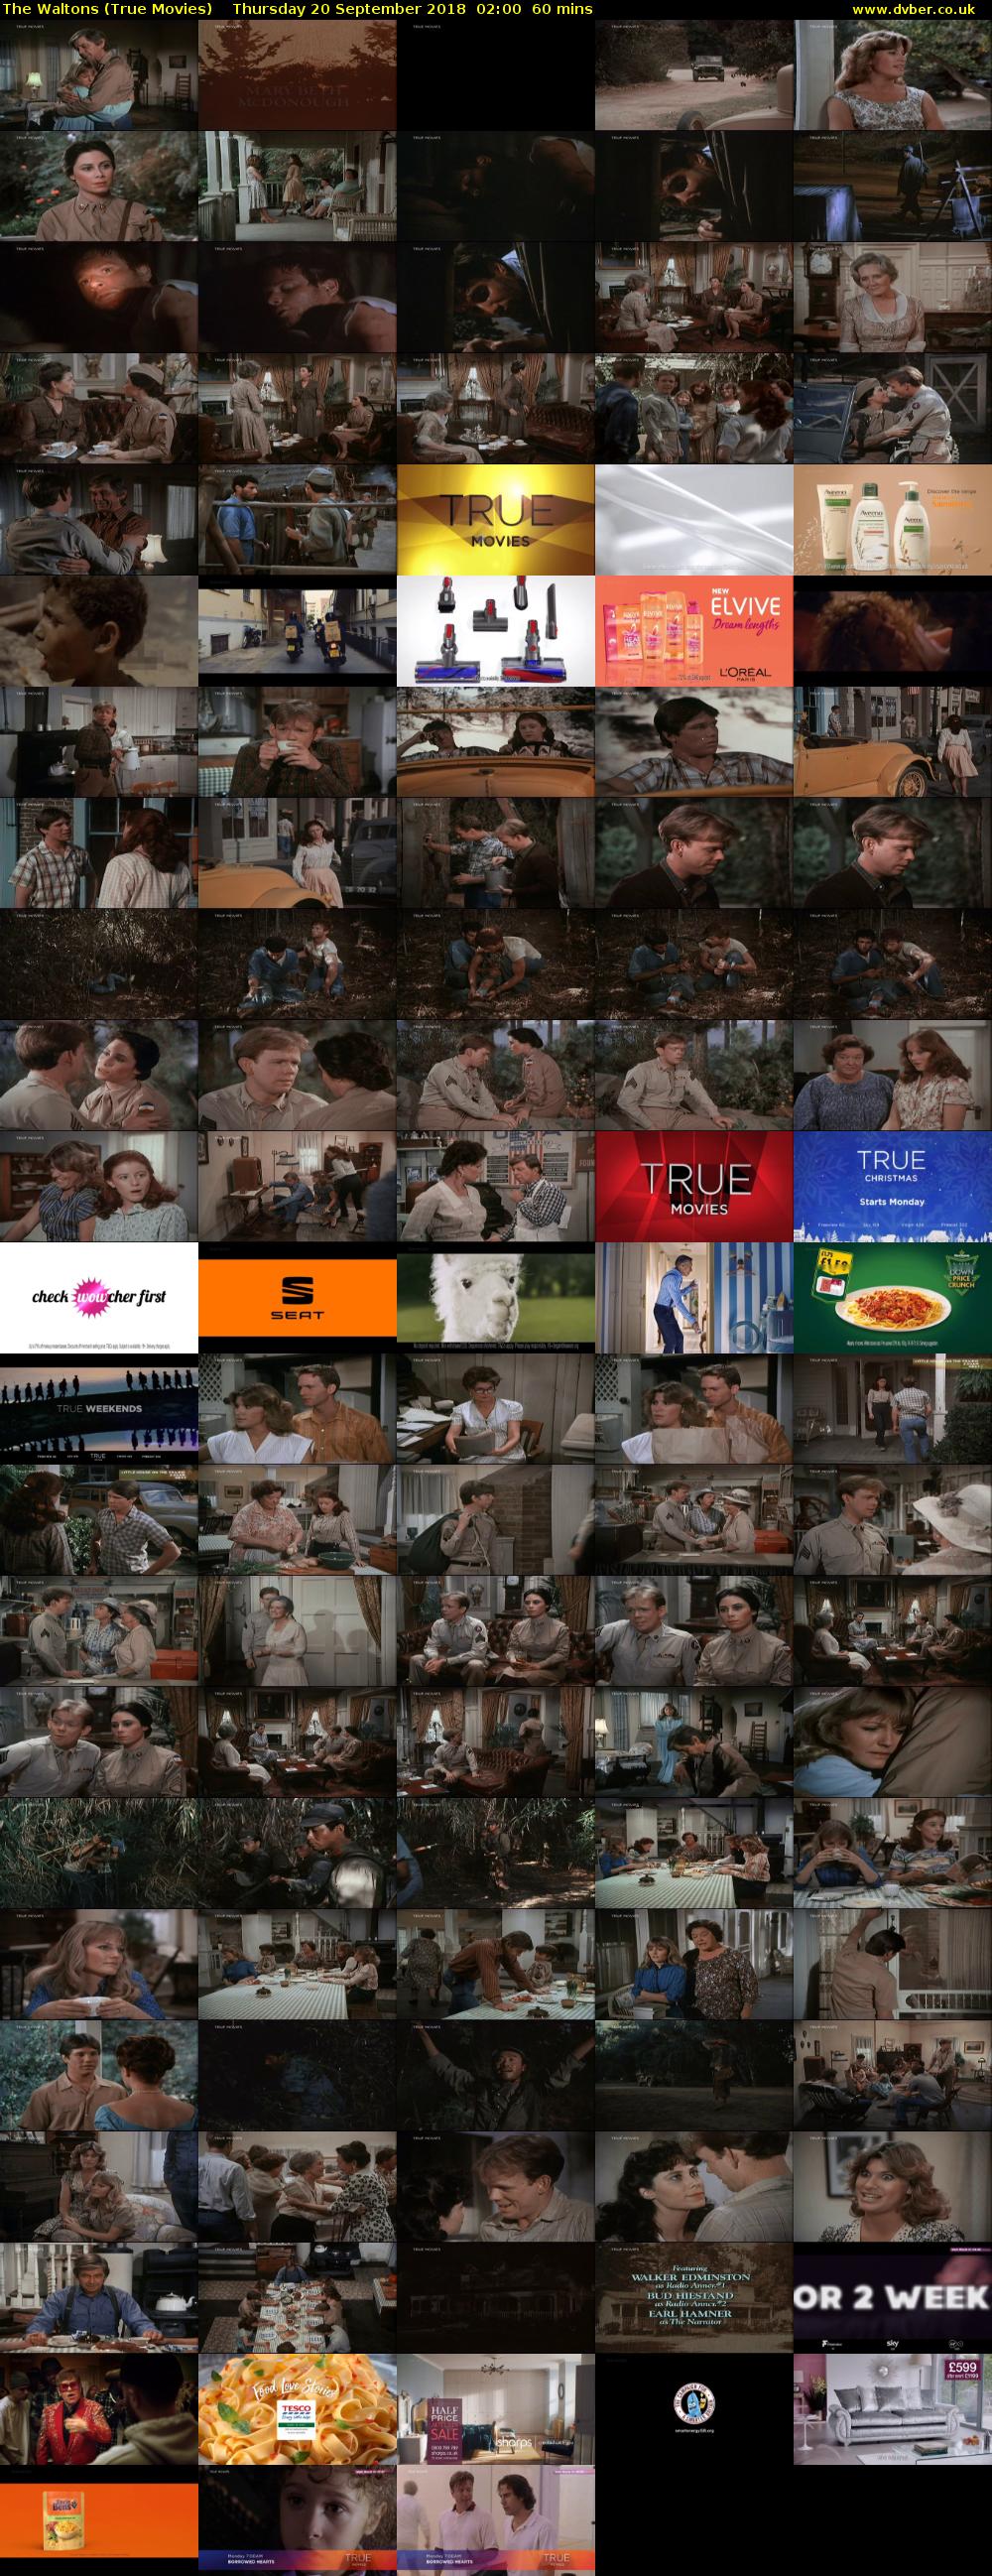 The Waltons (True Movies) Thursday 20 September 2018 02:00 - 03:00